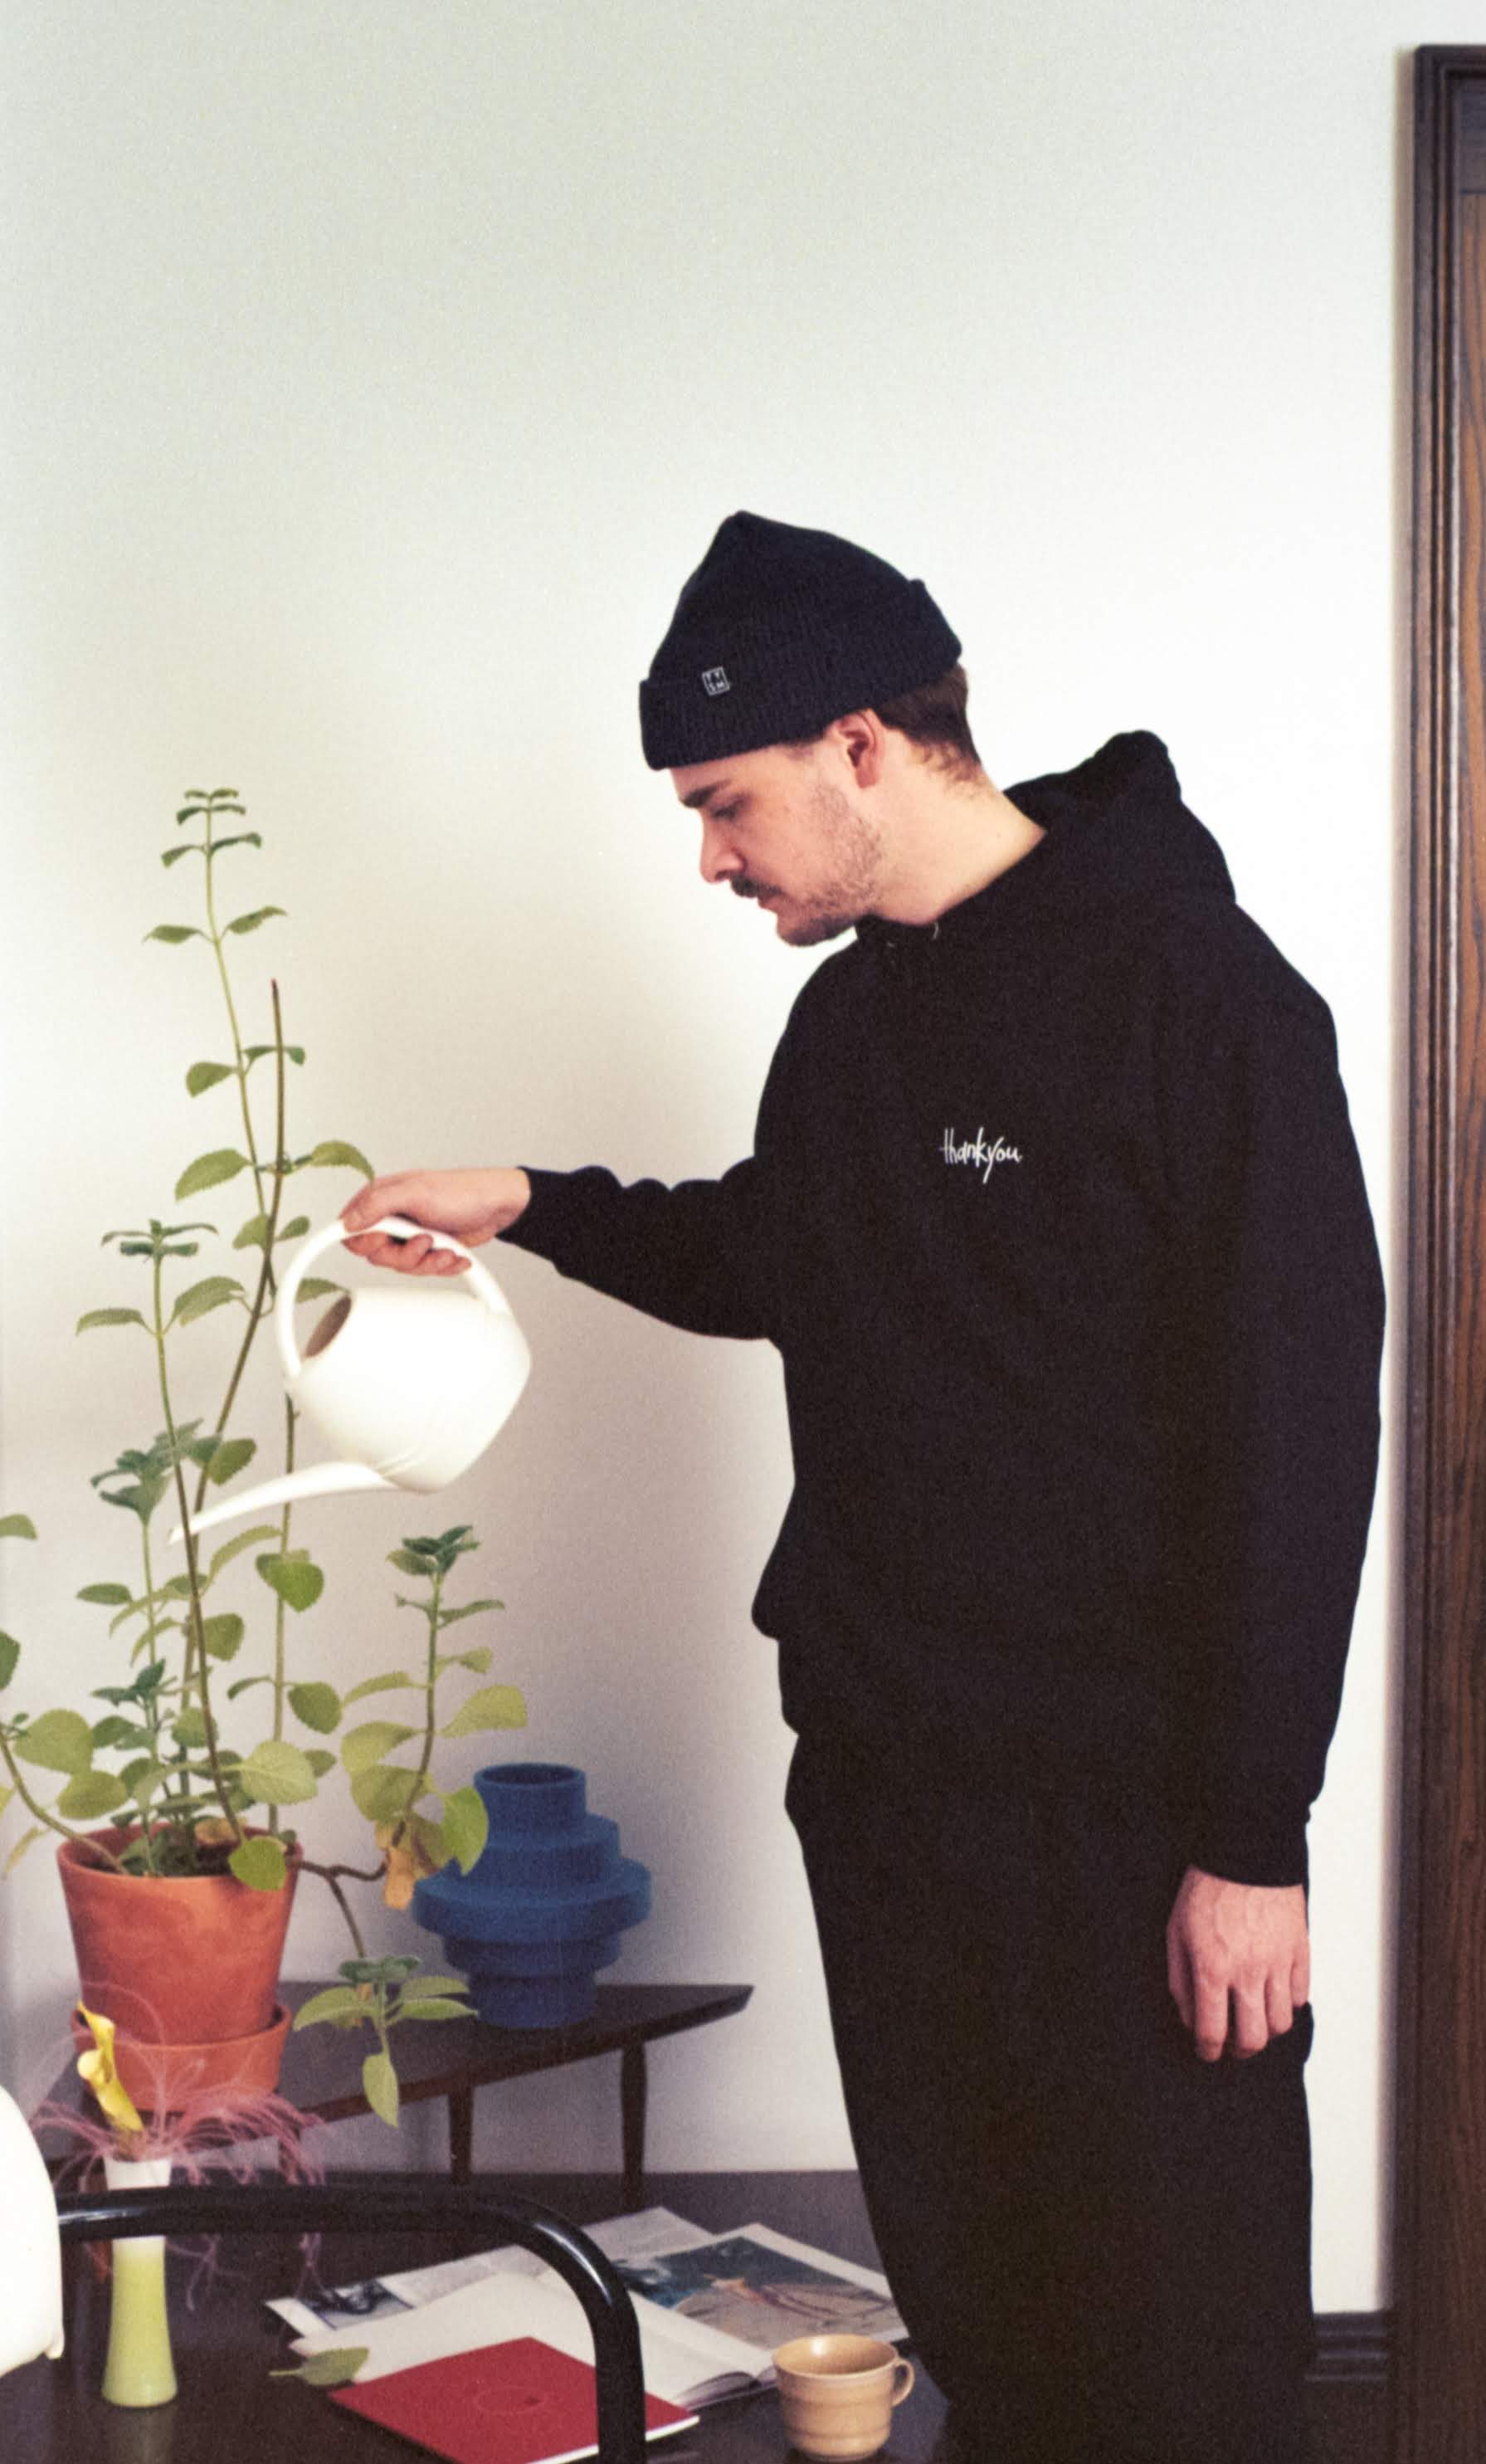 Friend watering a plant in a thankyou hoody